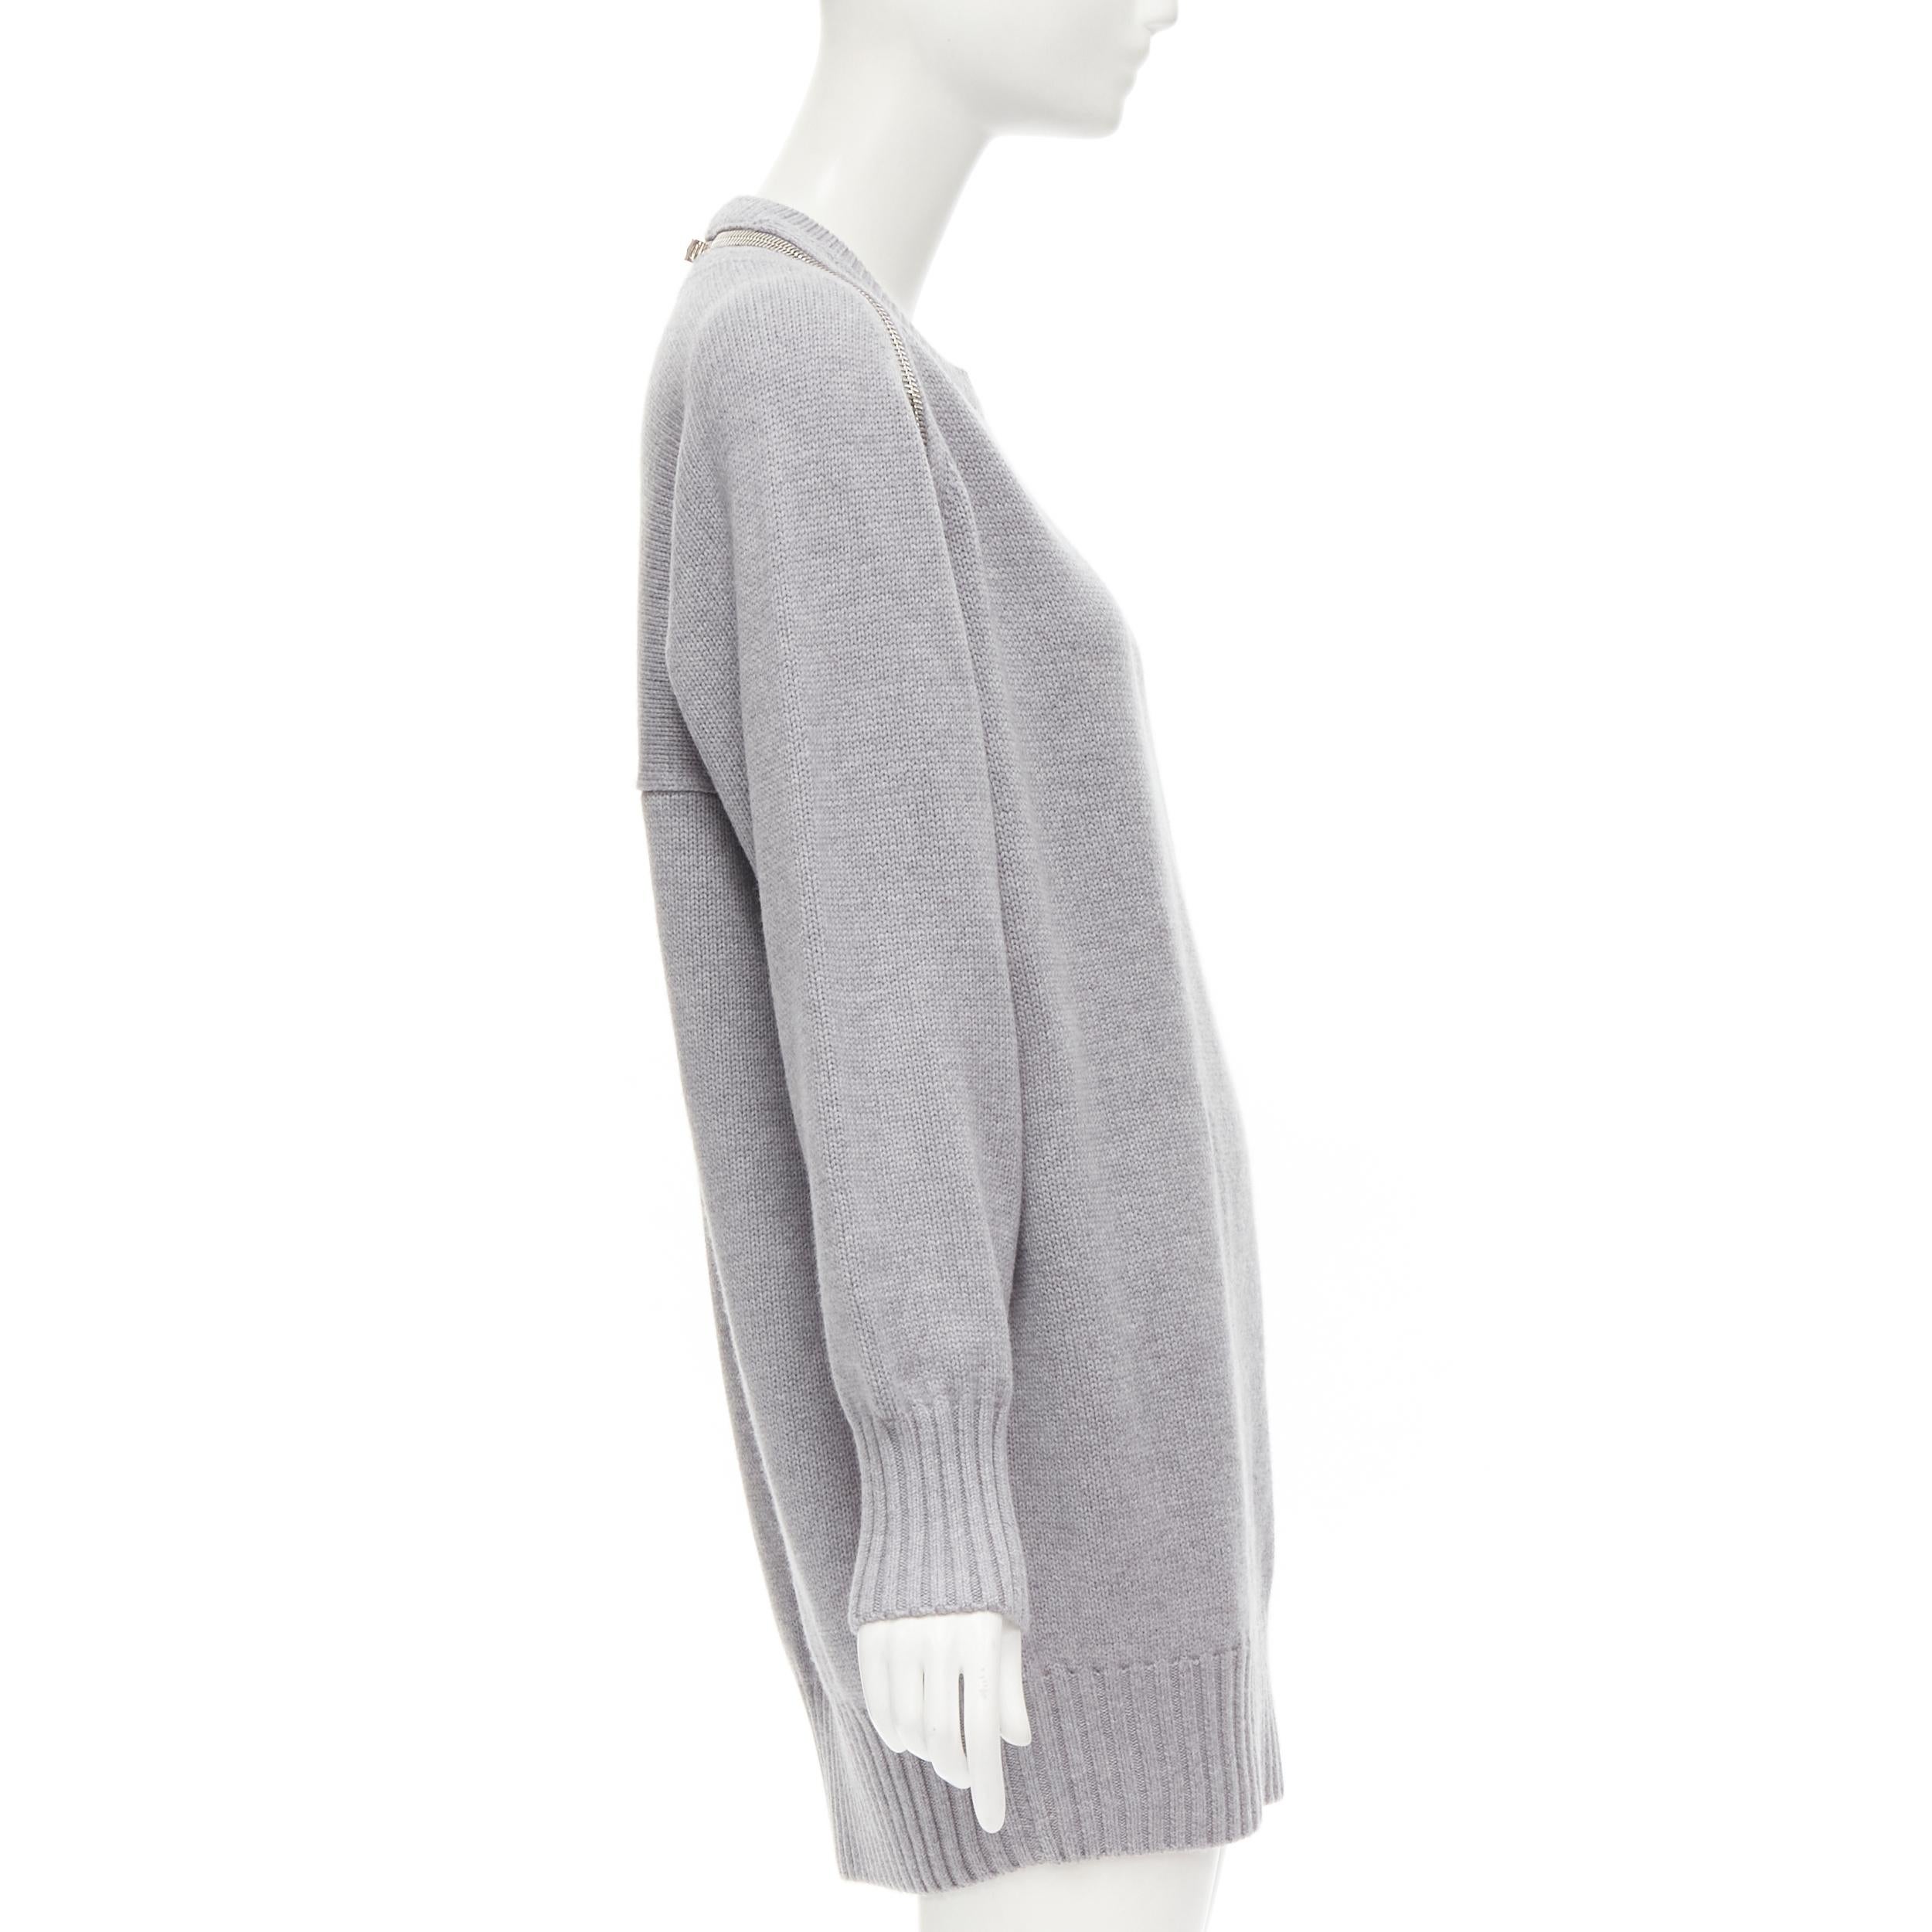 Women's ALEXANDER WANG grey merino wool chunky knit zip trim sweater dress M